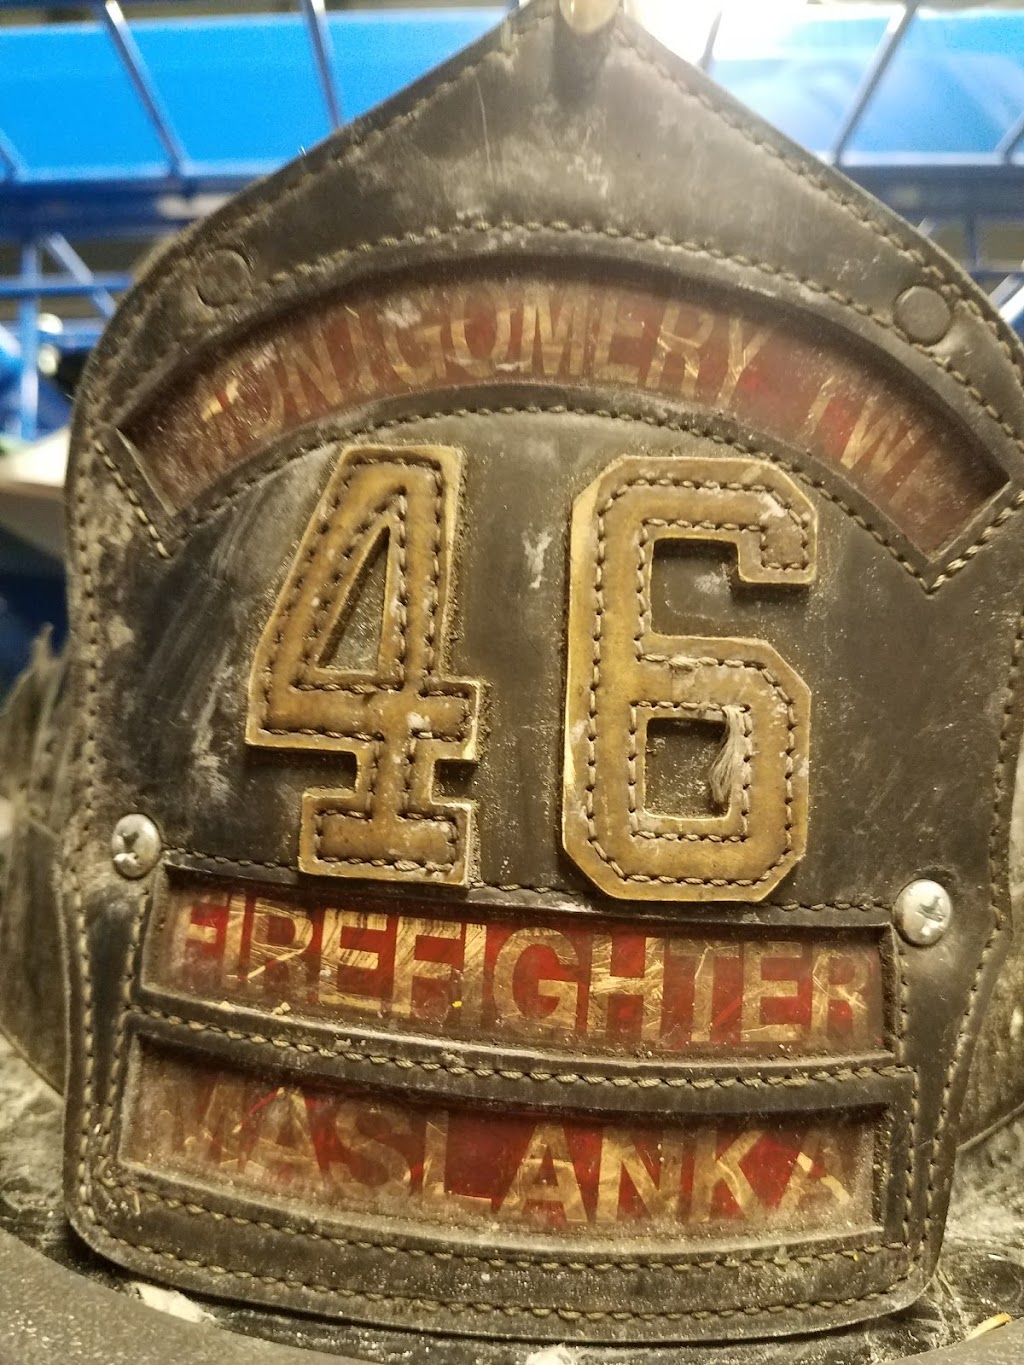 Montgomery Township Volunteer Fire Company No. 2 | 529 Co Rd 518, Skillman, NJ 08558 | Phone: (609) 466-3926